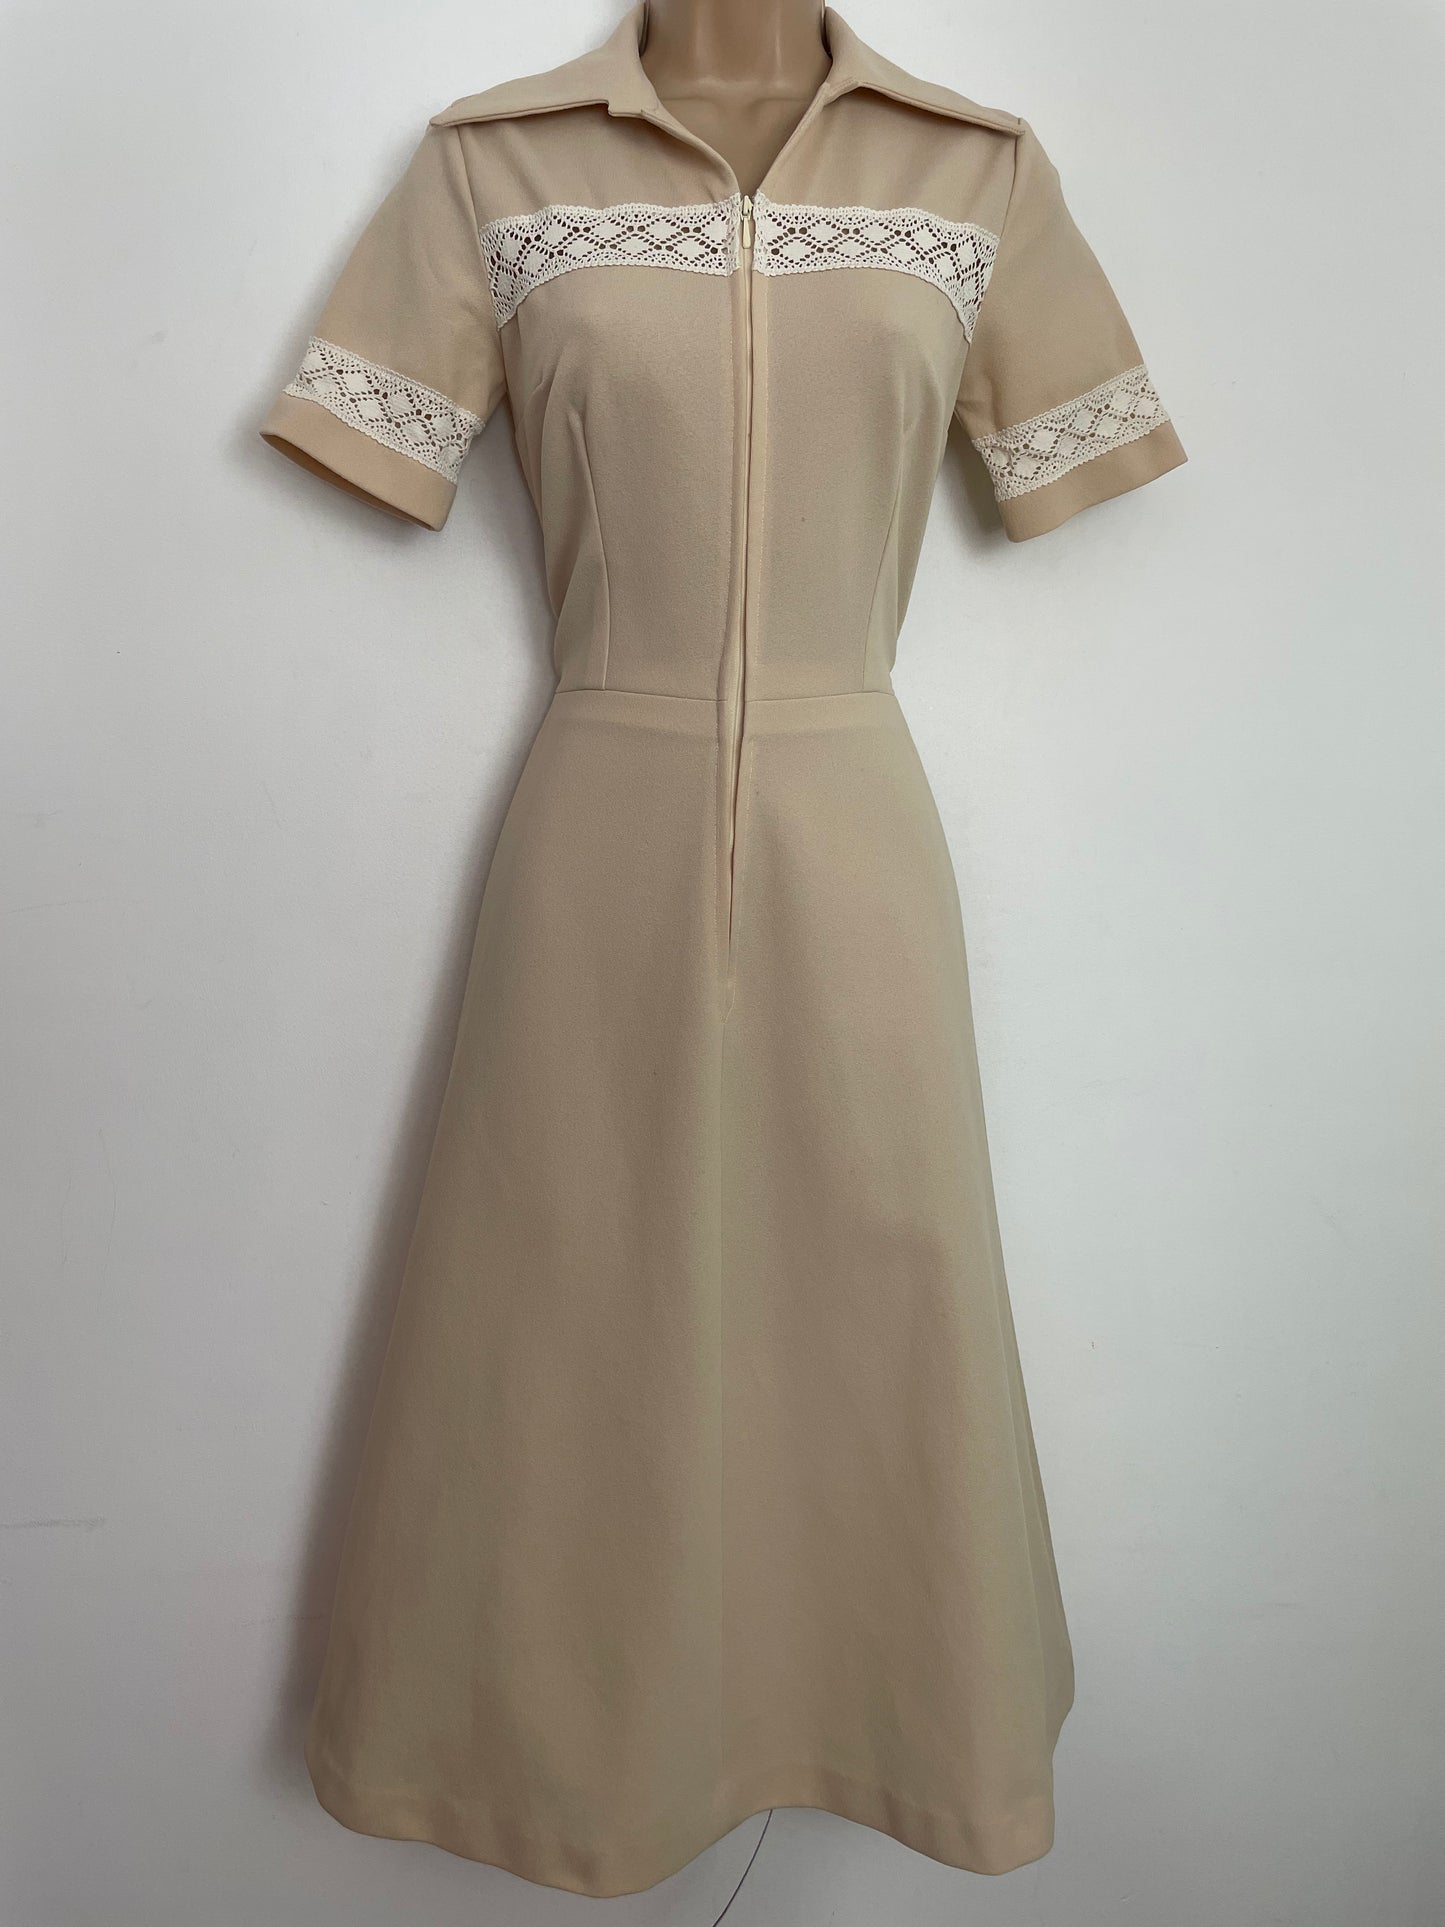 Vintage 1970s UK Size 6 Cream Lace Insert Dagger Collar Shirt Style Zip Front Mod Day Dress